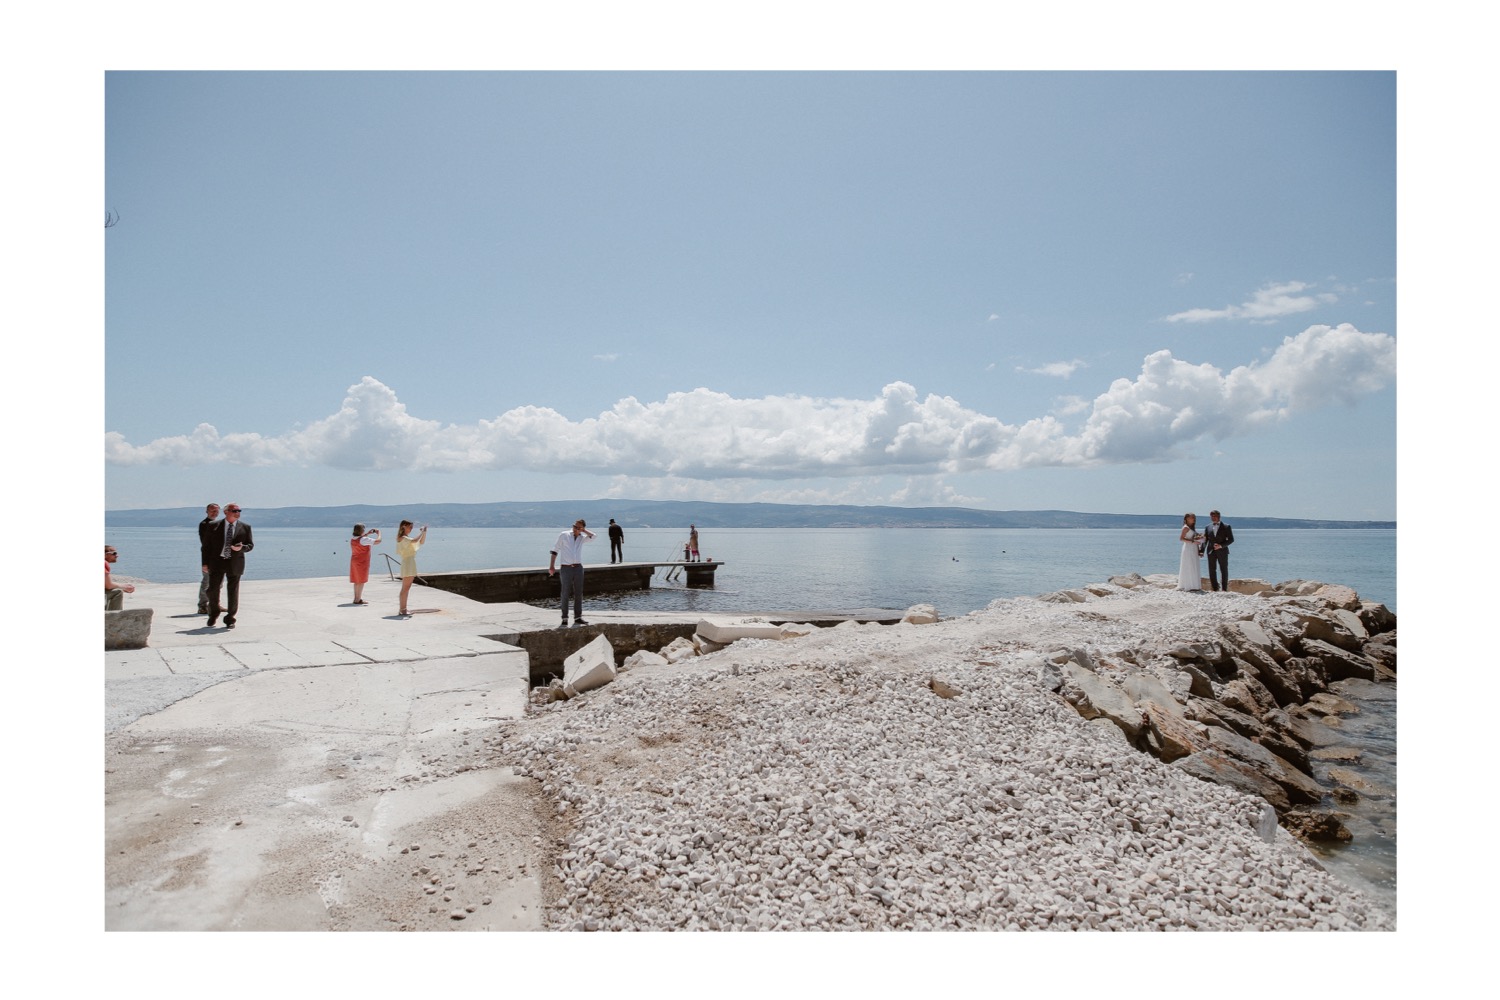 Croatia beach elopement hilke thomas love and ventures photography 37 | Croatia Elopement Photographer and Videographer